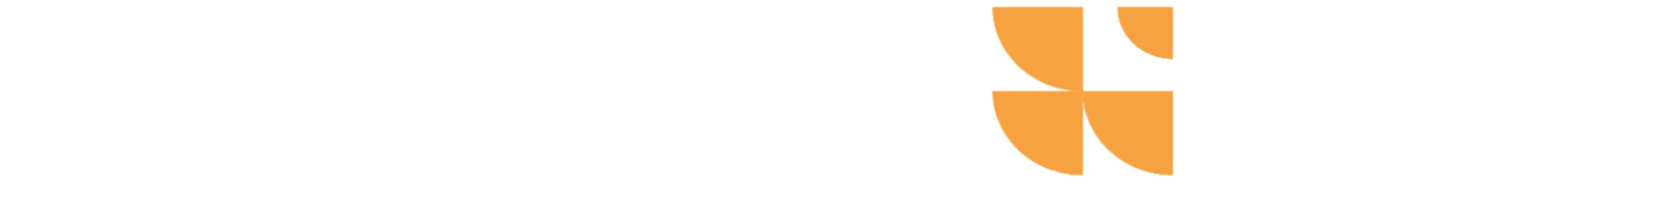 Canada GSO  logo